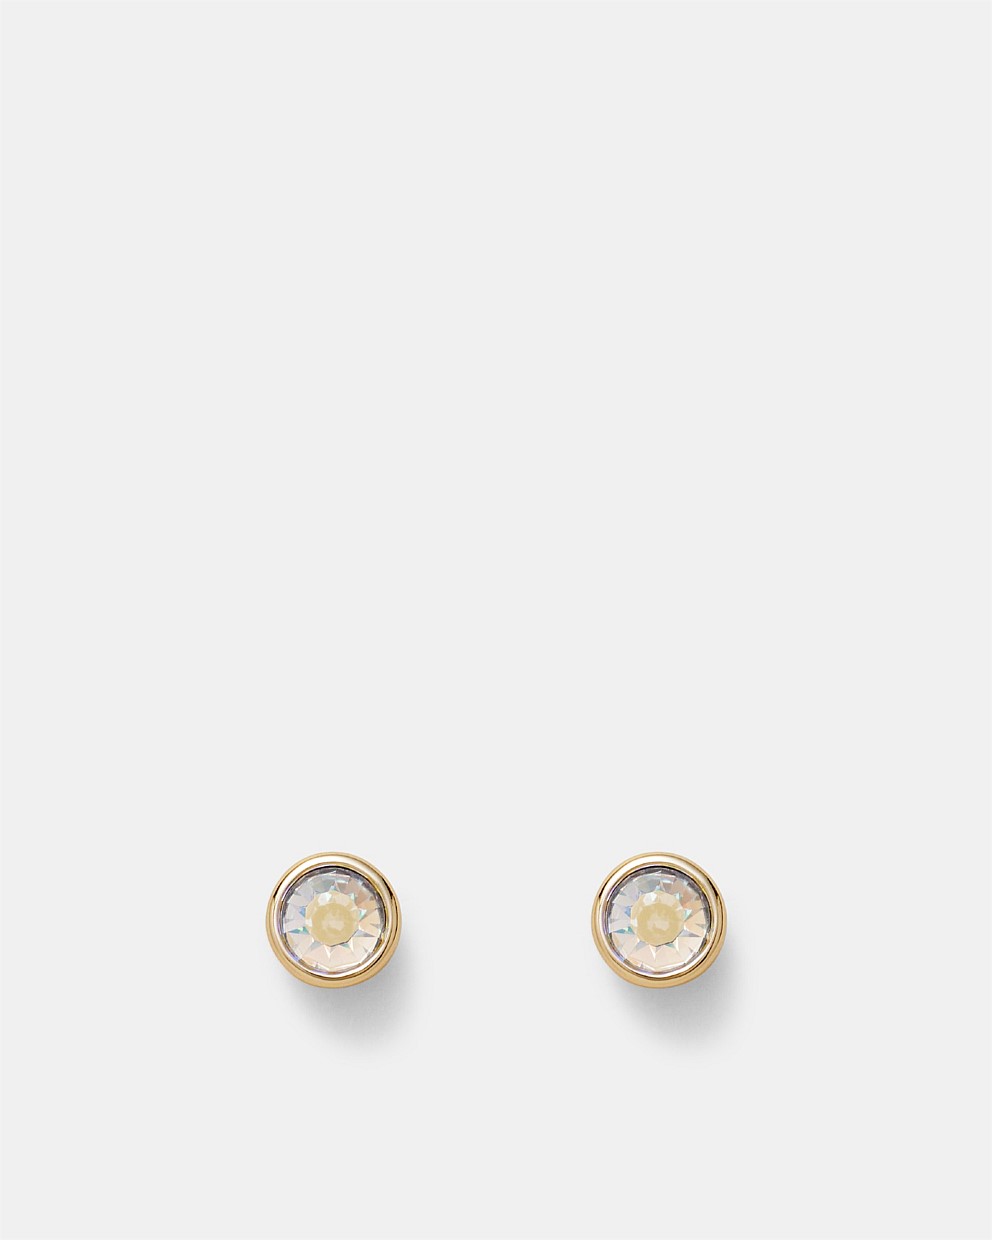 Gold Orbit Stud Earrings - Stud Earrings | Mimco